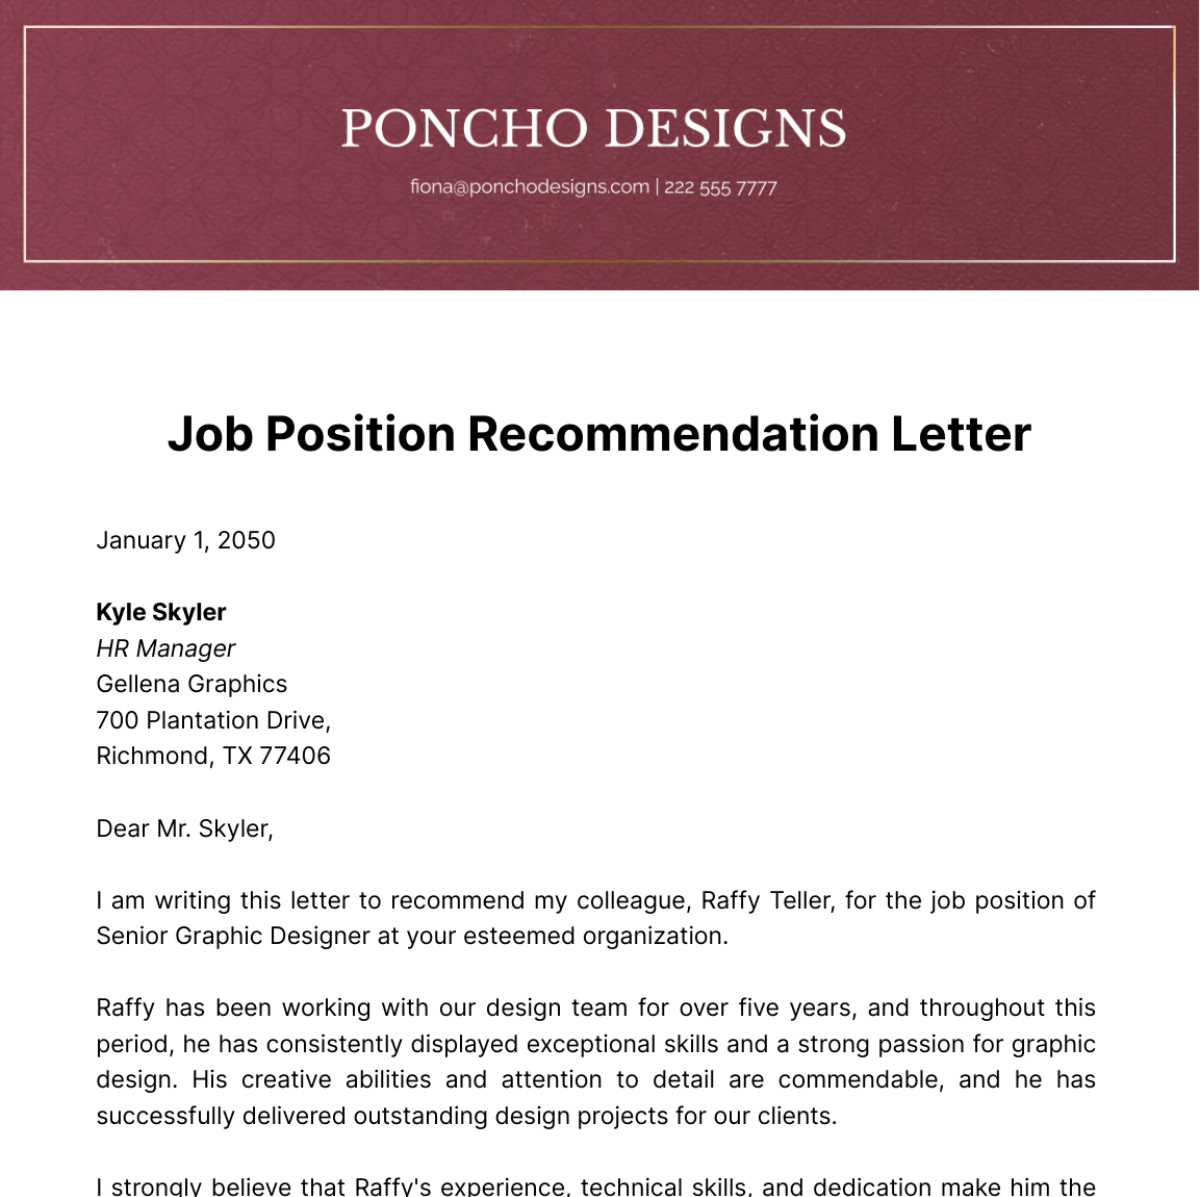 Job Position Recommendation Letter   Template